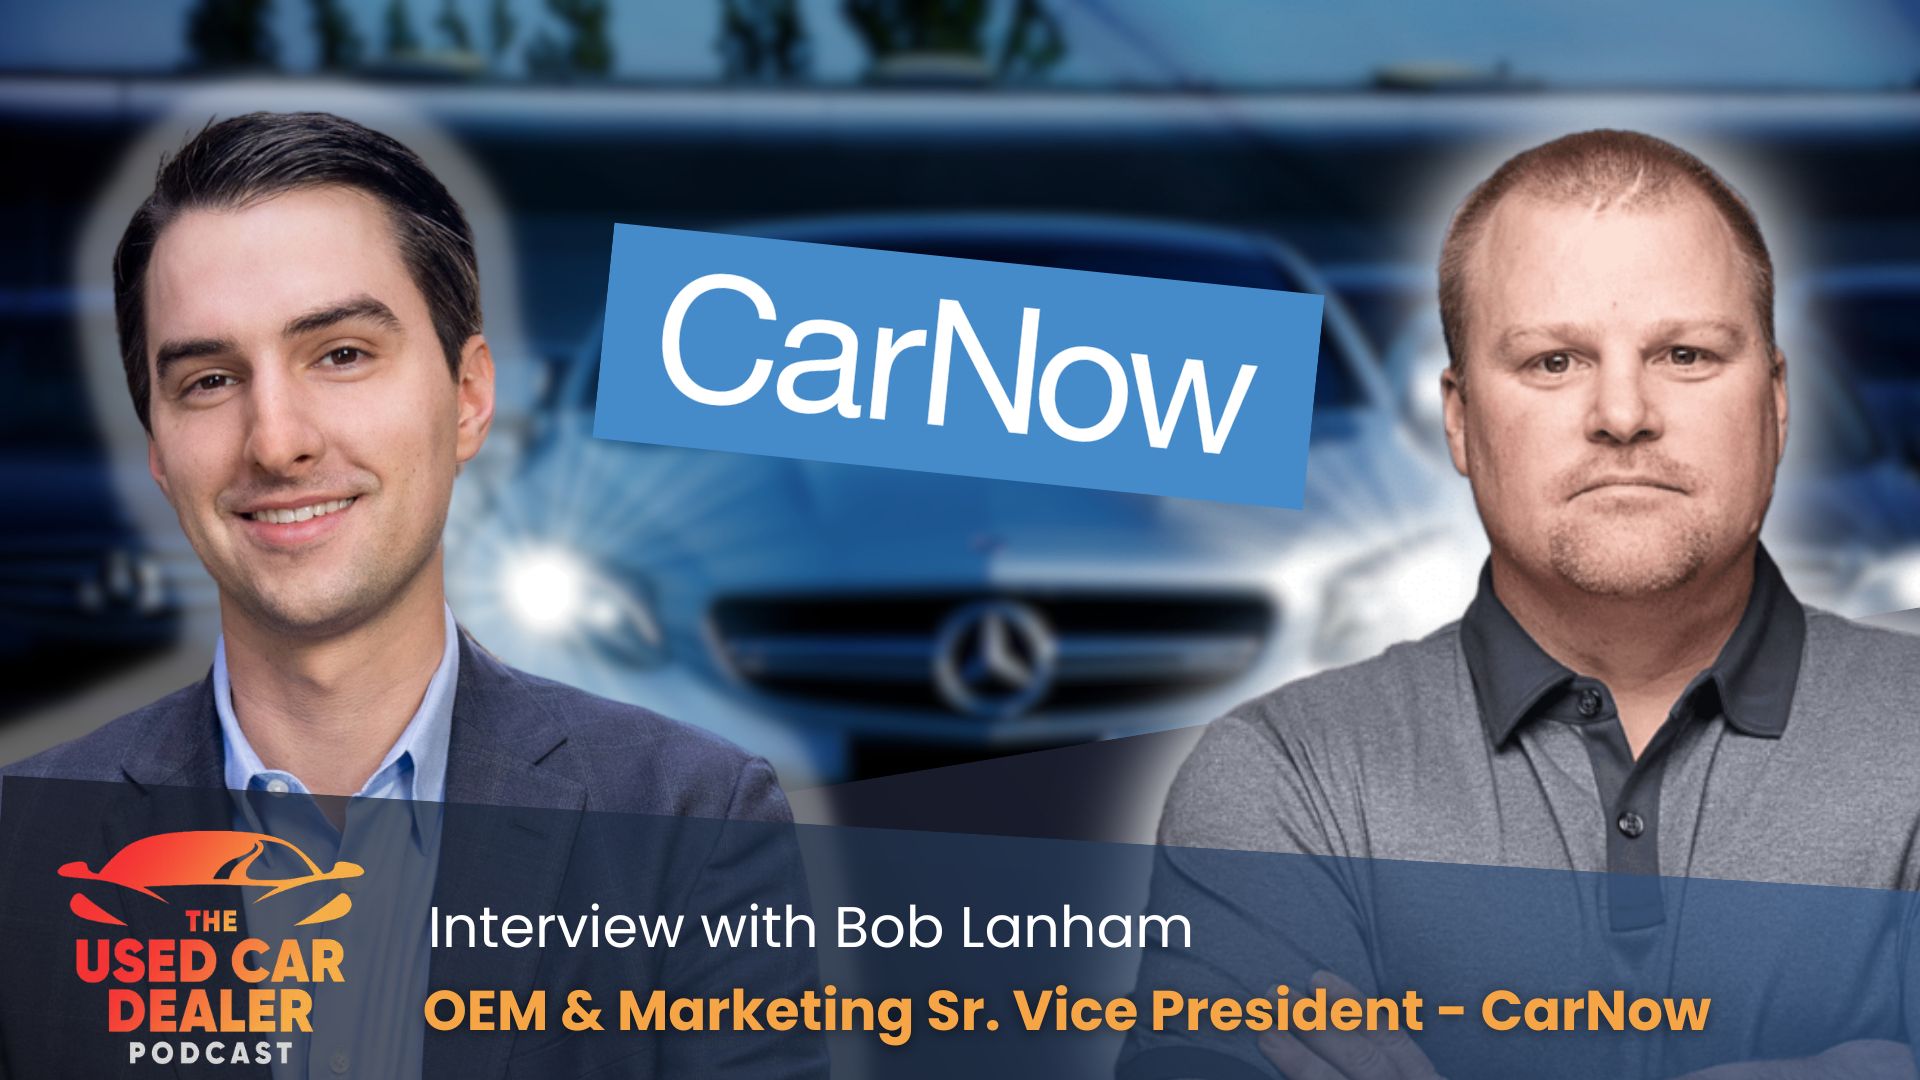 Interview with Bob Lanham, SVP of OEM & Marketing at CarNow